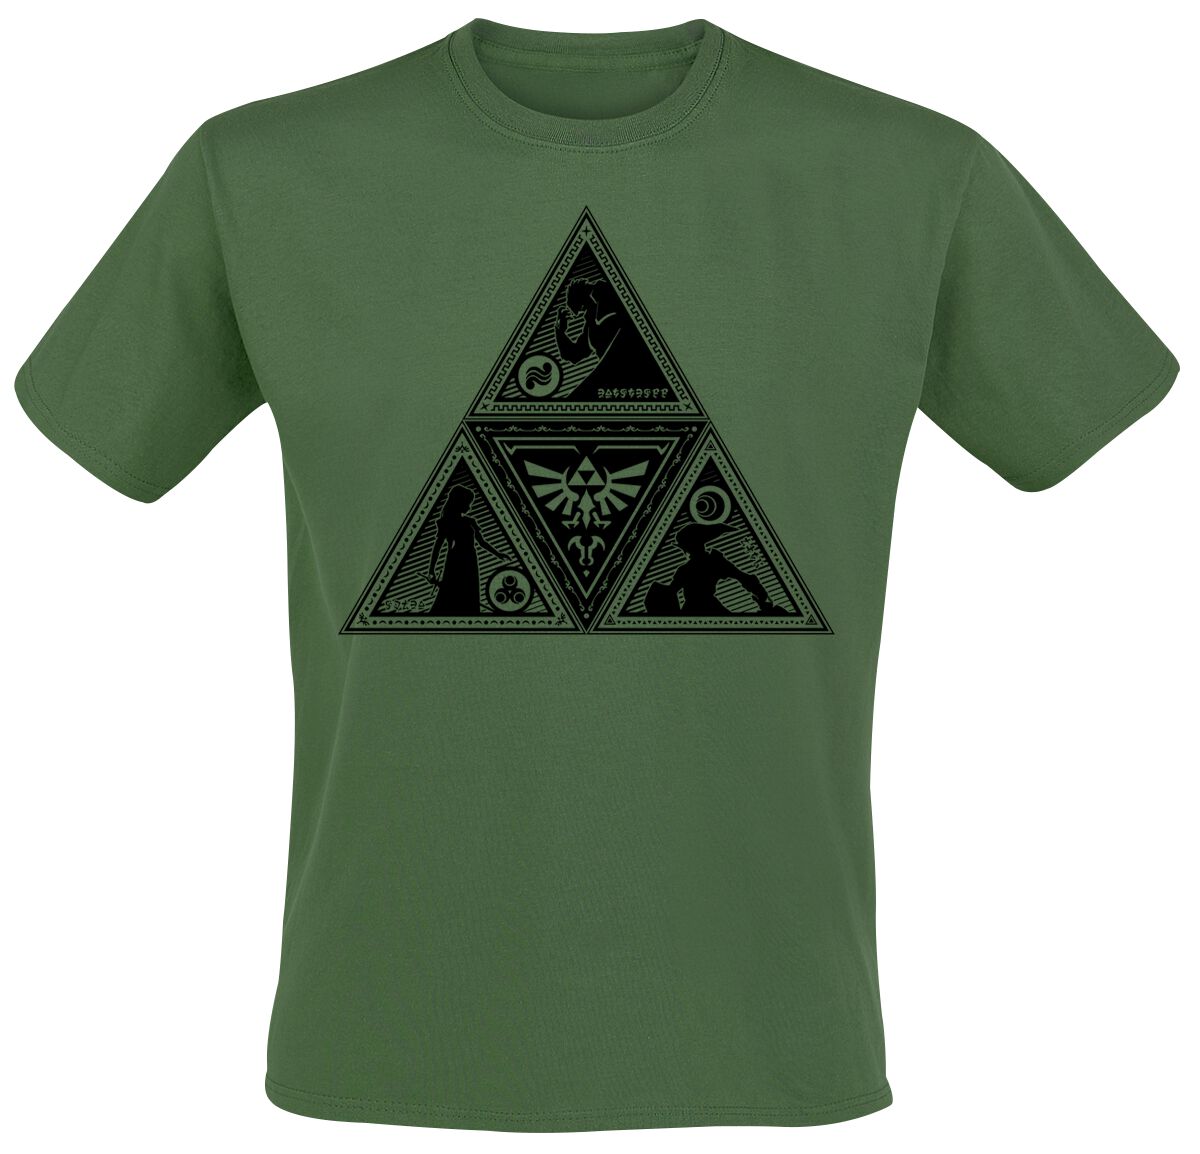 The Legend Of Zelda Triforce T-Shirt dunkelgrün in L